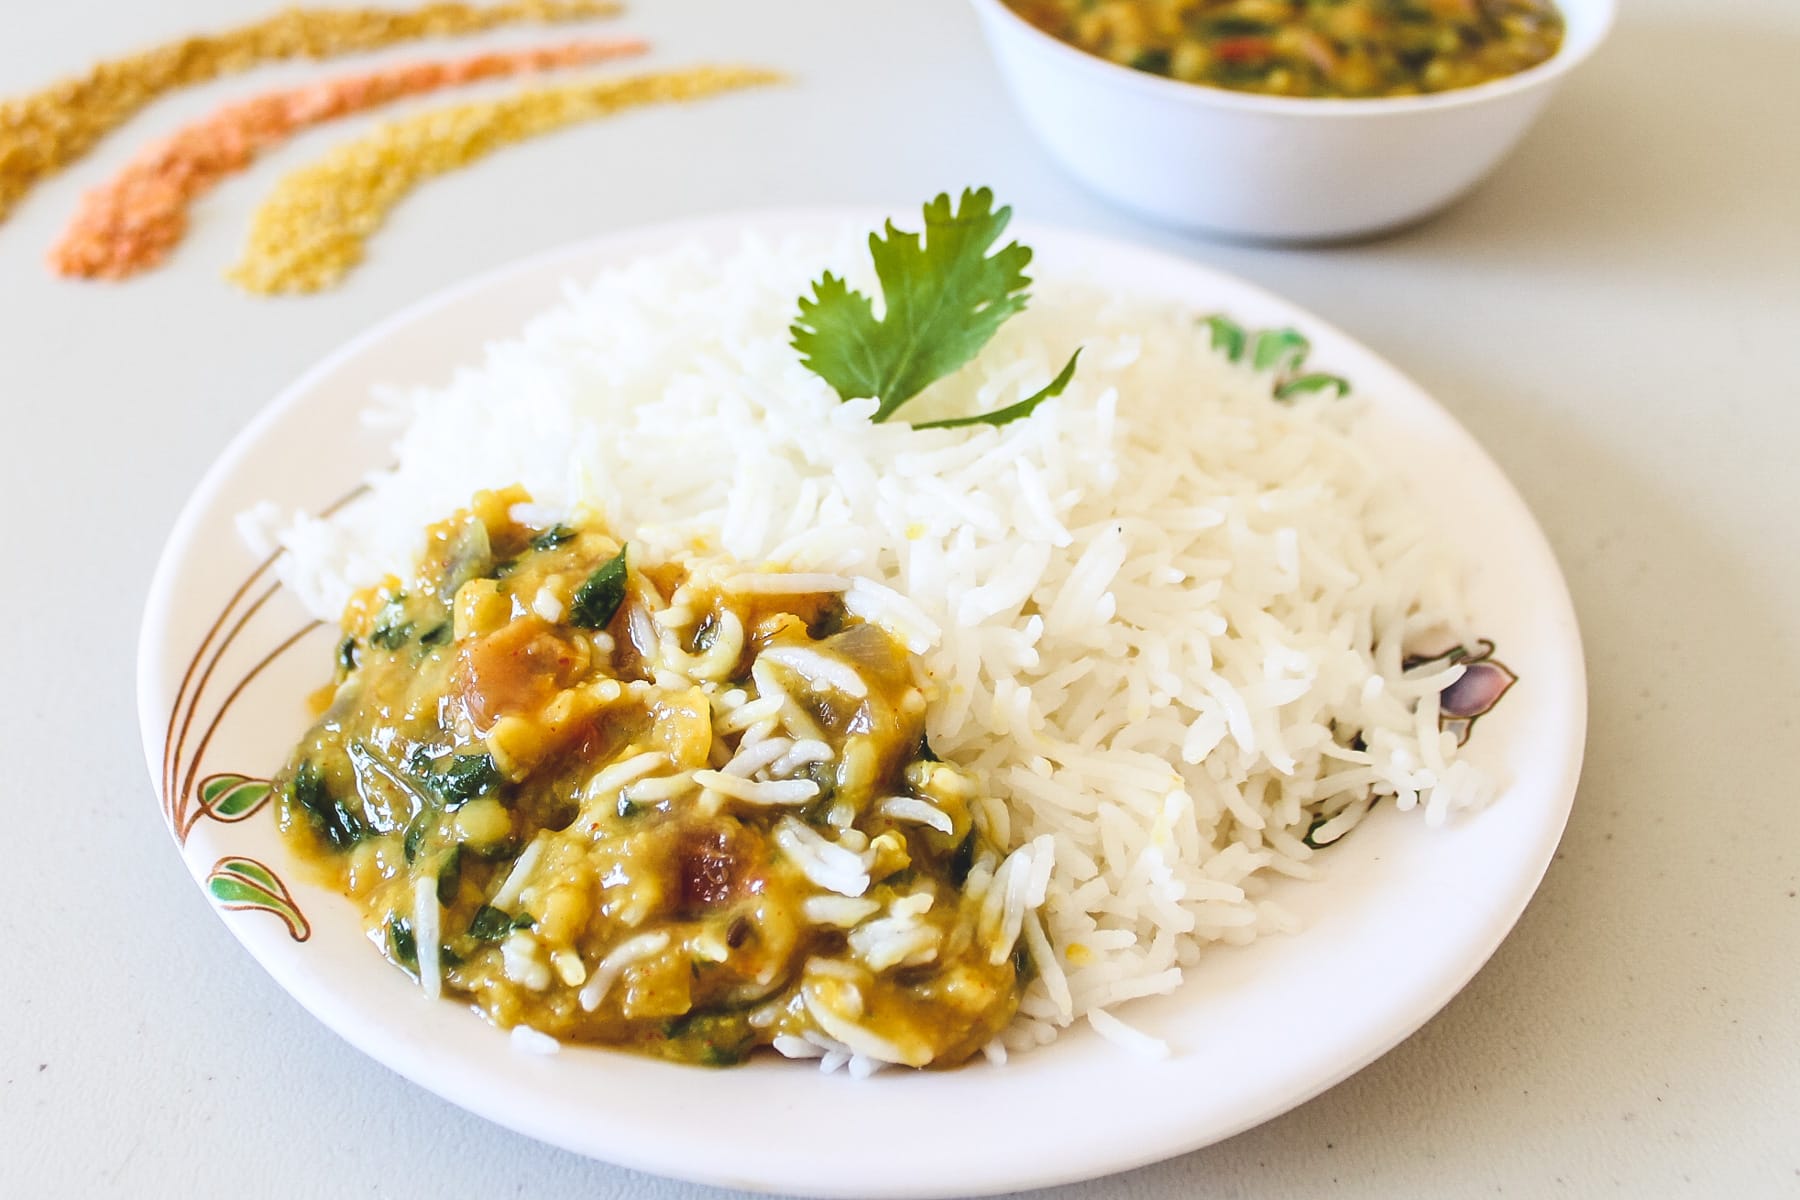 Methi dal mixed with basmati rice.